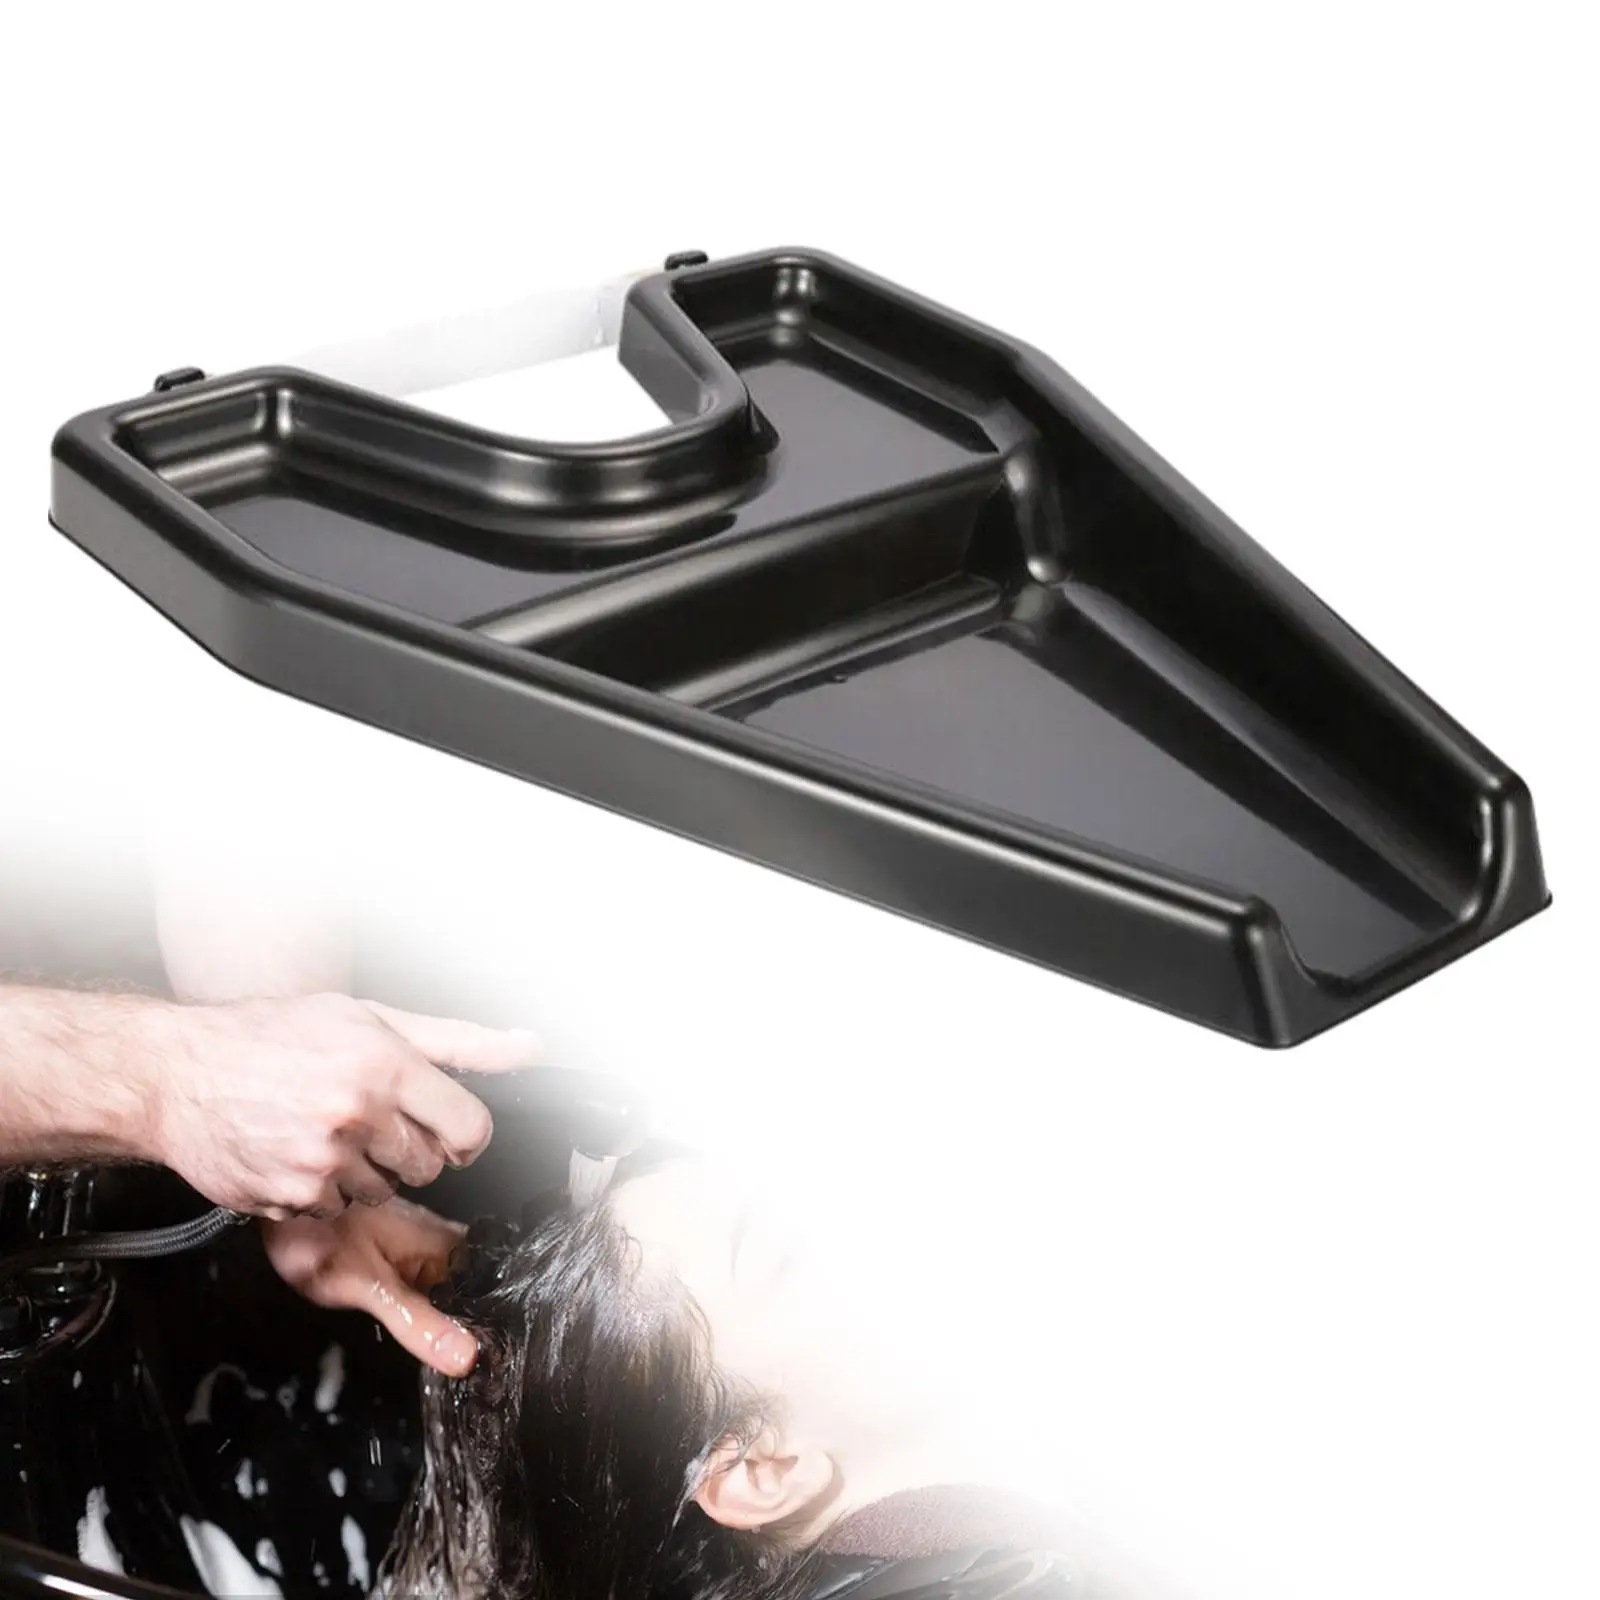 Shampoo Basin Wash Hair in Bed Hair Wash Tub Hair Washing Basin Hair Washing Tray for Seniors Stylists Elderly Kids Disabled